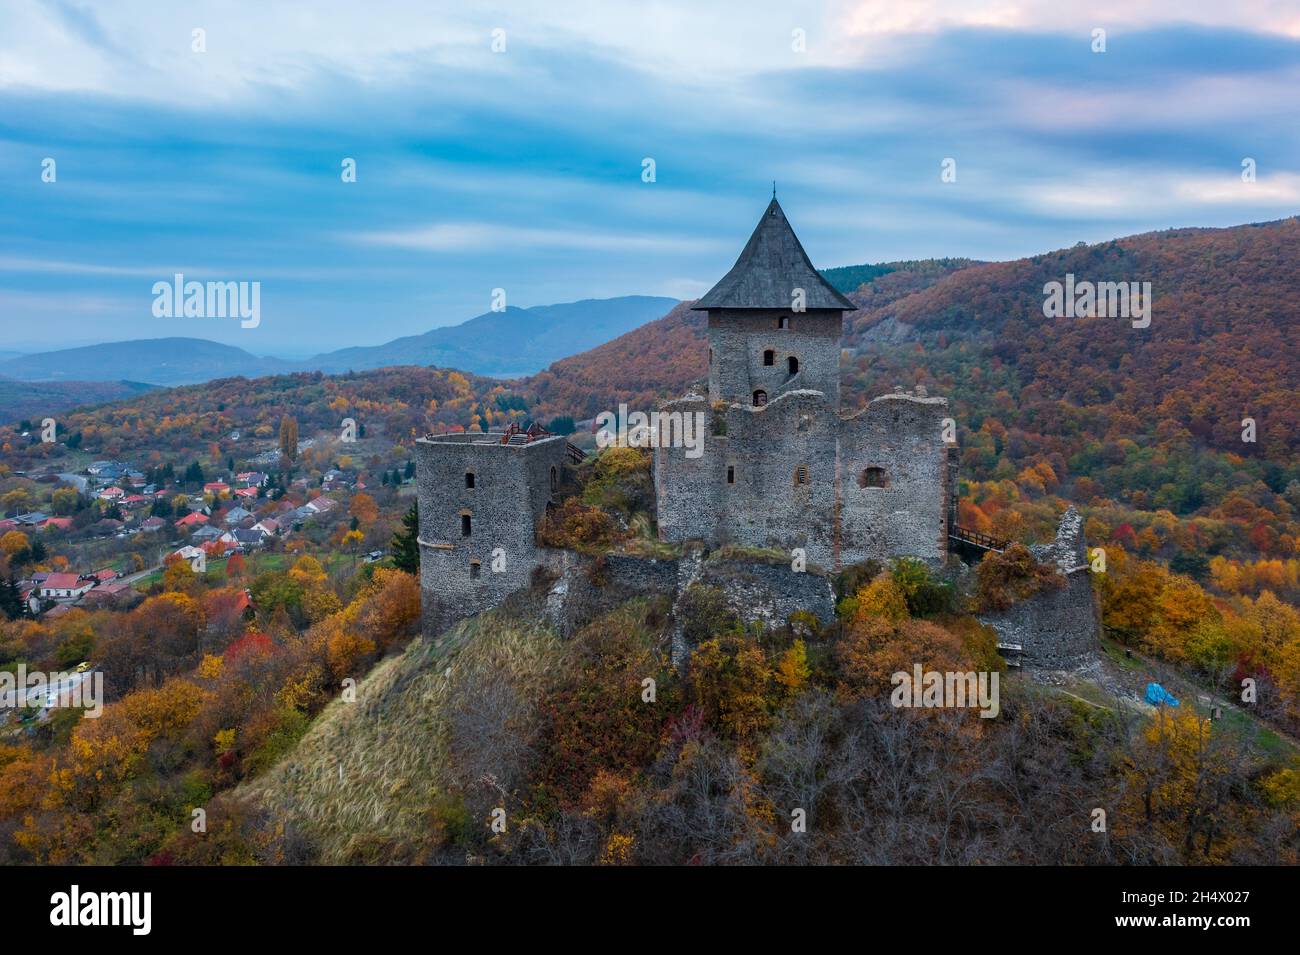 Splendid aerial view of the famous Castle of Somosko. Slovakian name is Šomoška hrad, Hungarian name is Somoskői vár. Stock Photo